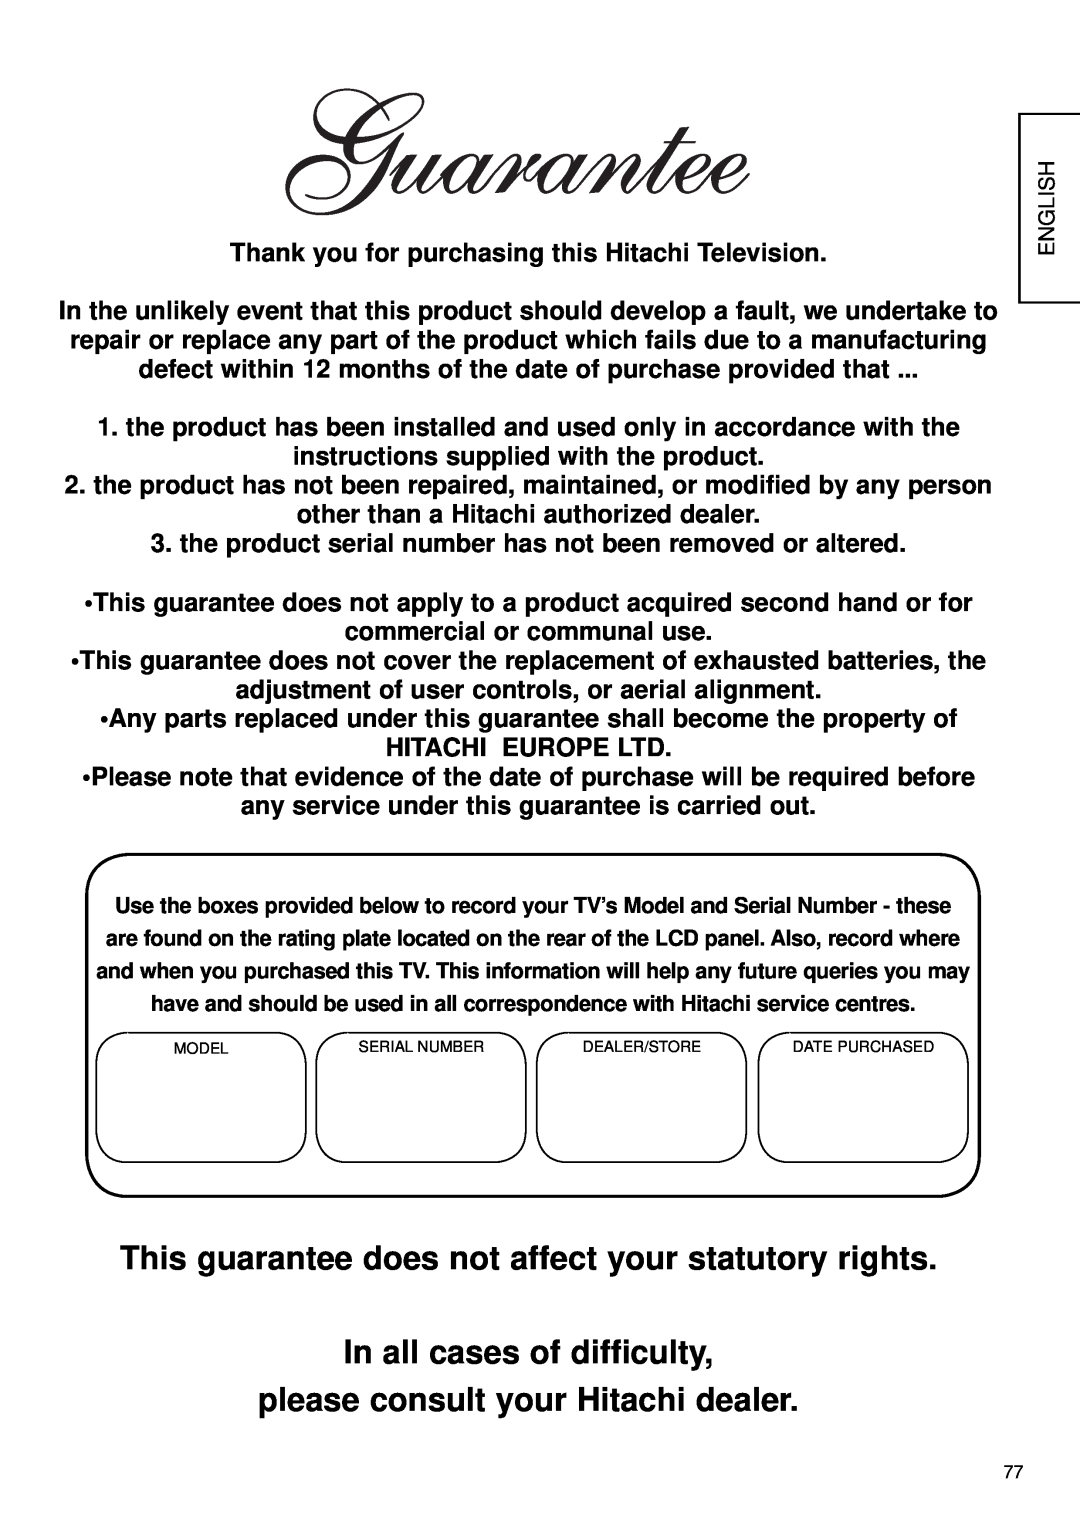 Hitachi 32LD9600, 32LD9700N, 32LD9700U, 37LD9700U, 37LD9700C, 37LD9600 This guarantee does not affect your statutory rights 